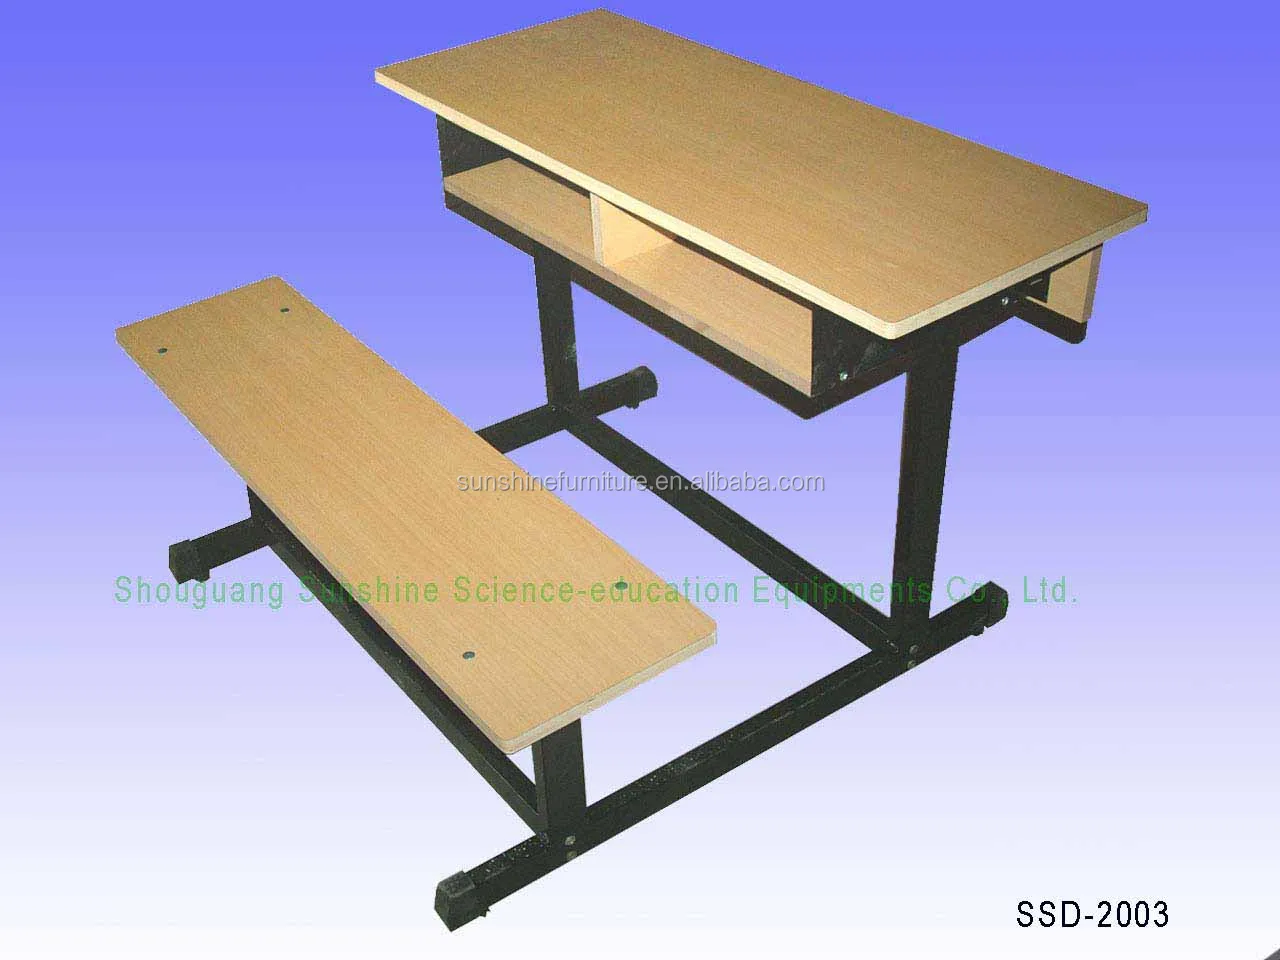 Double Wooden School Desk And Chair School Desk Bench Two Seater School Desks